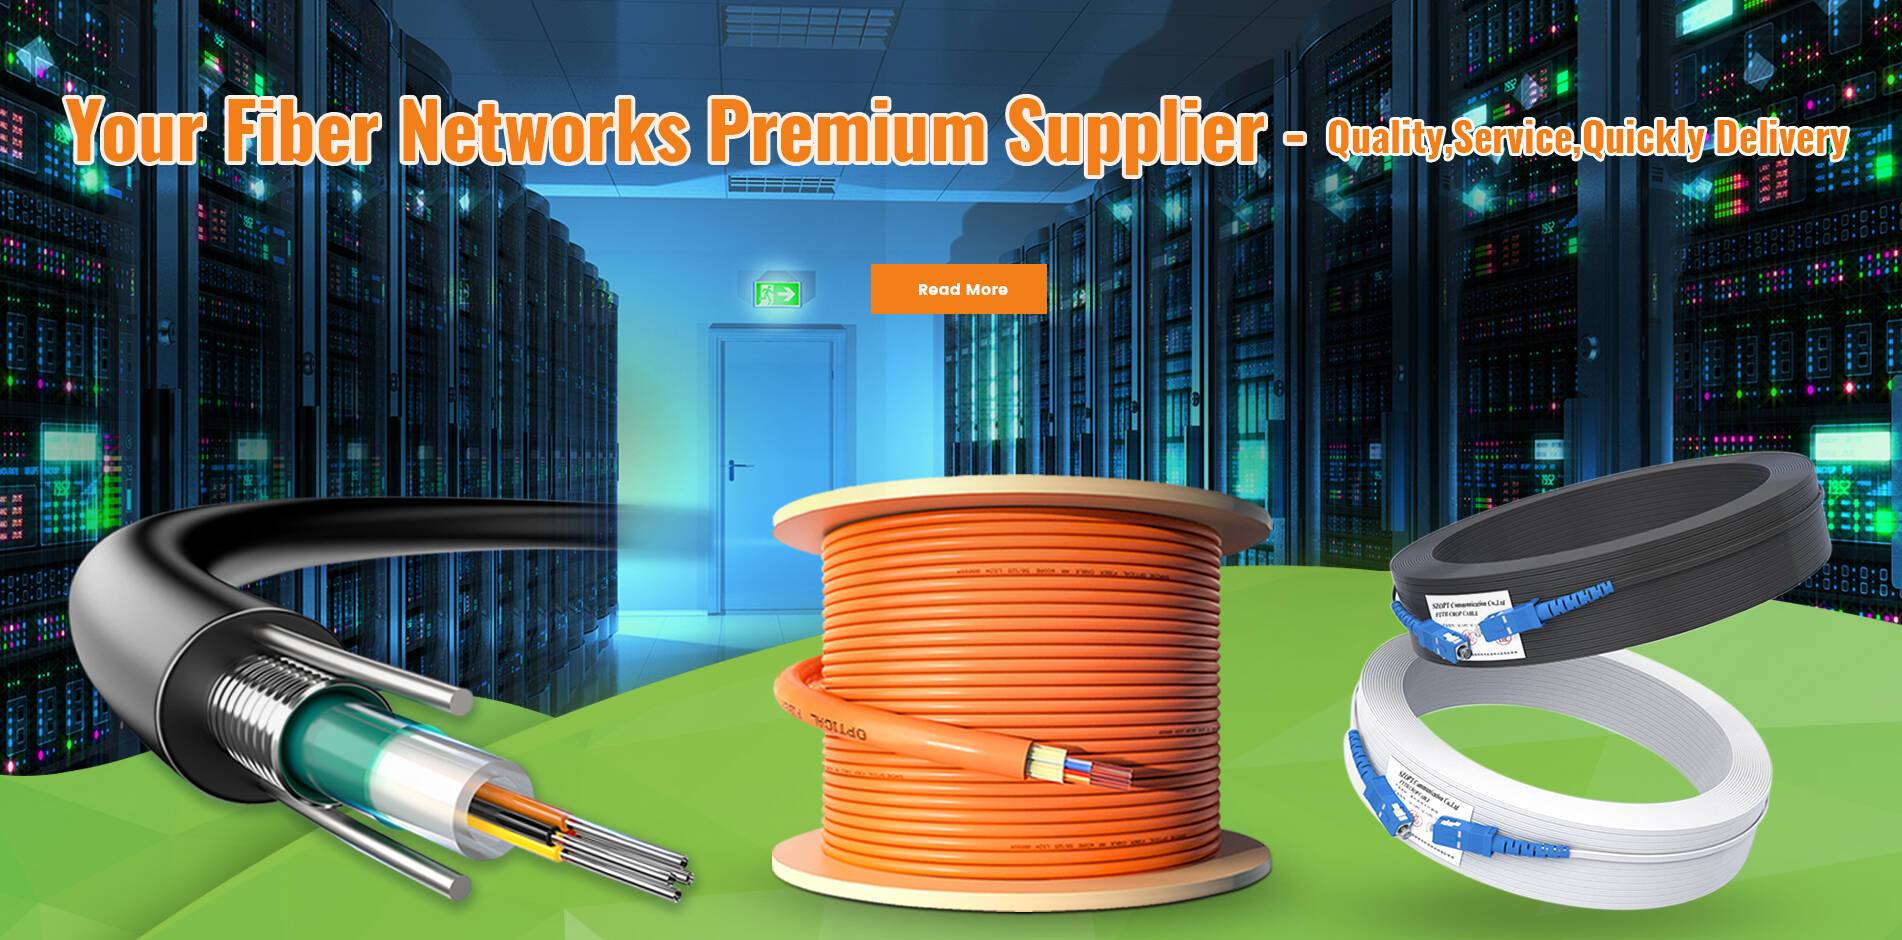 Your fiber networks premium supplier